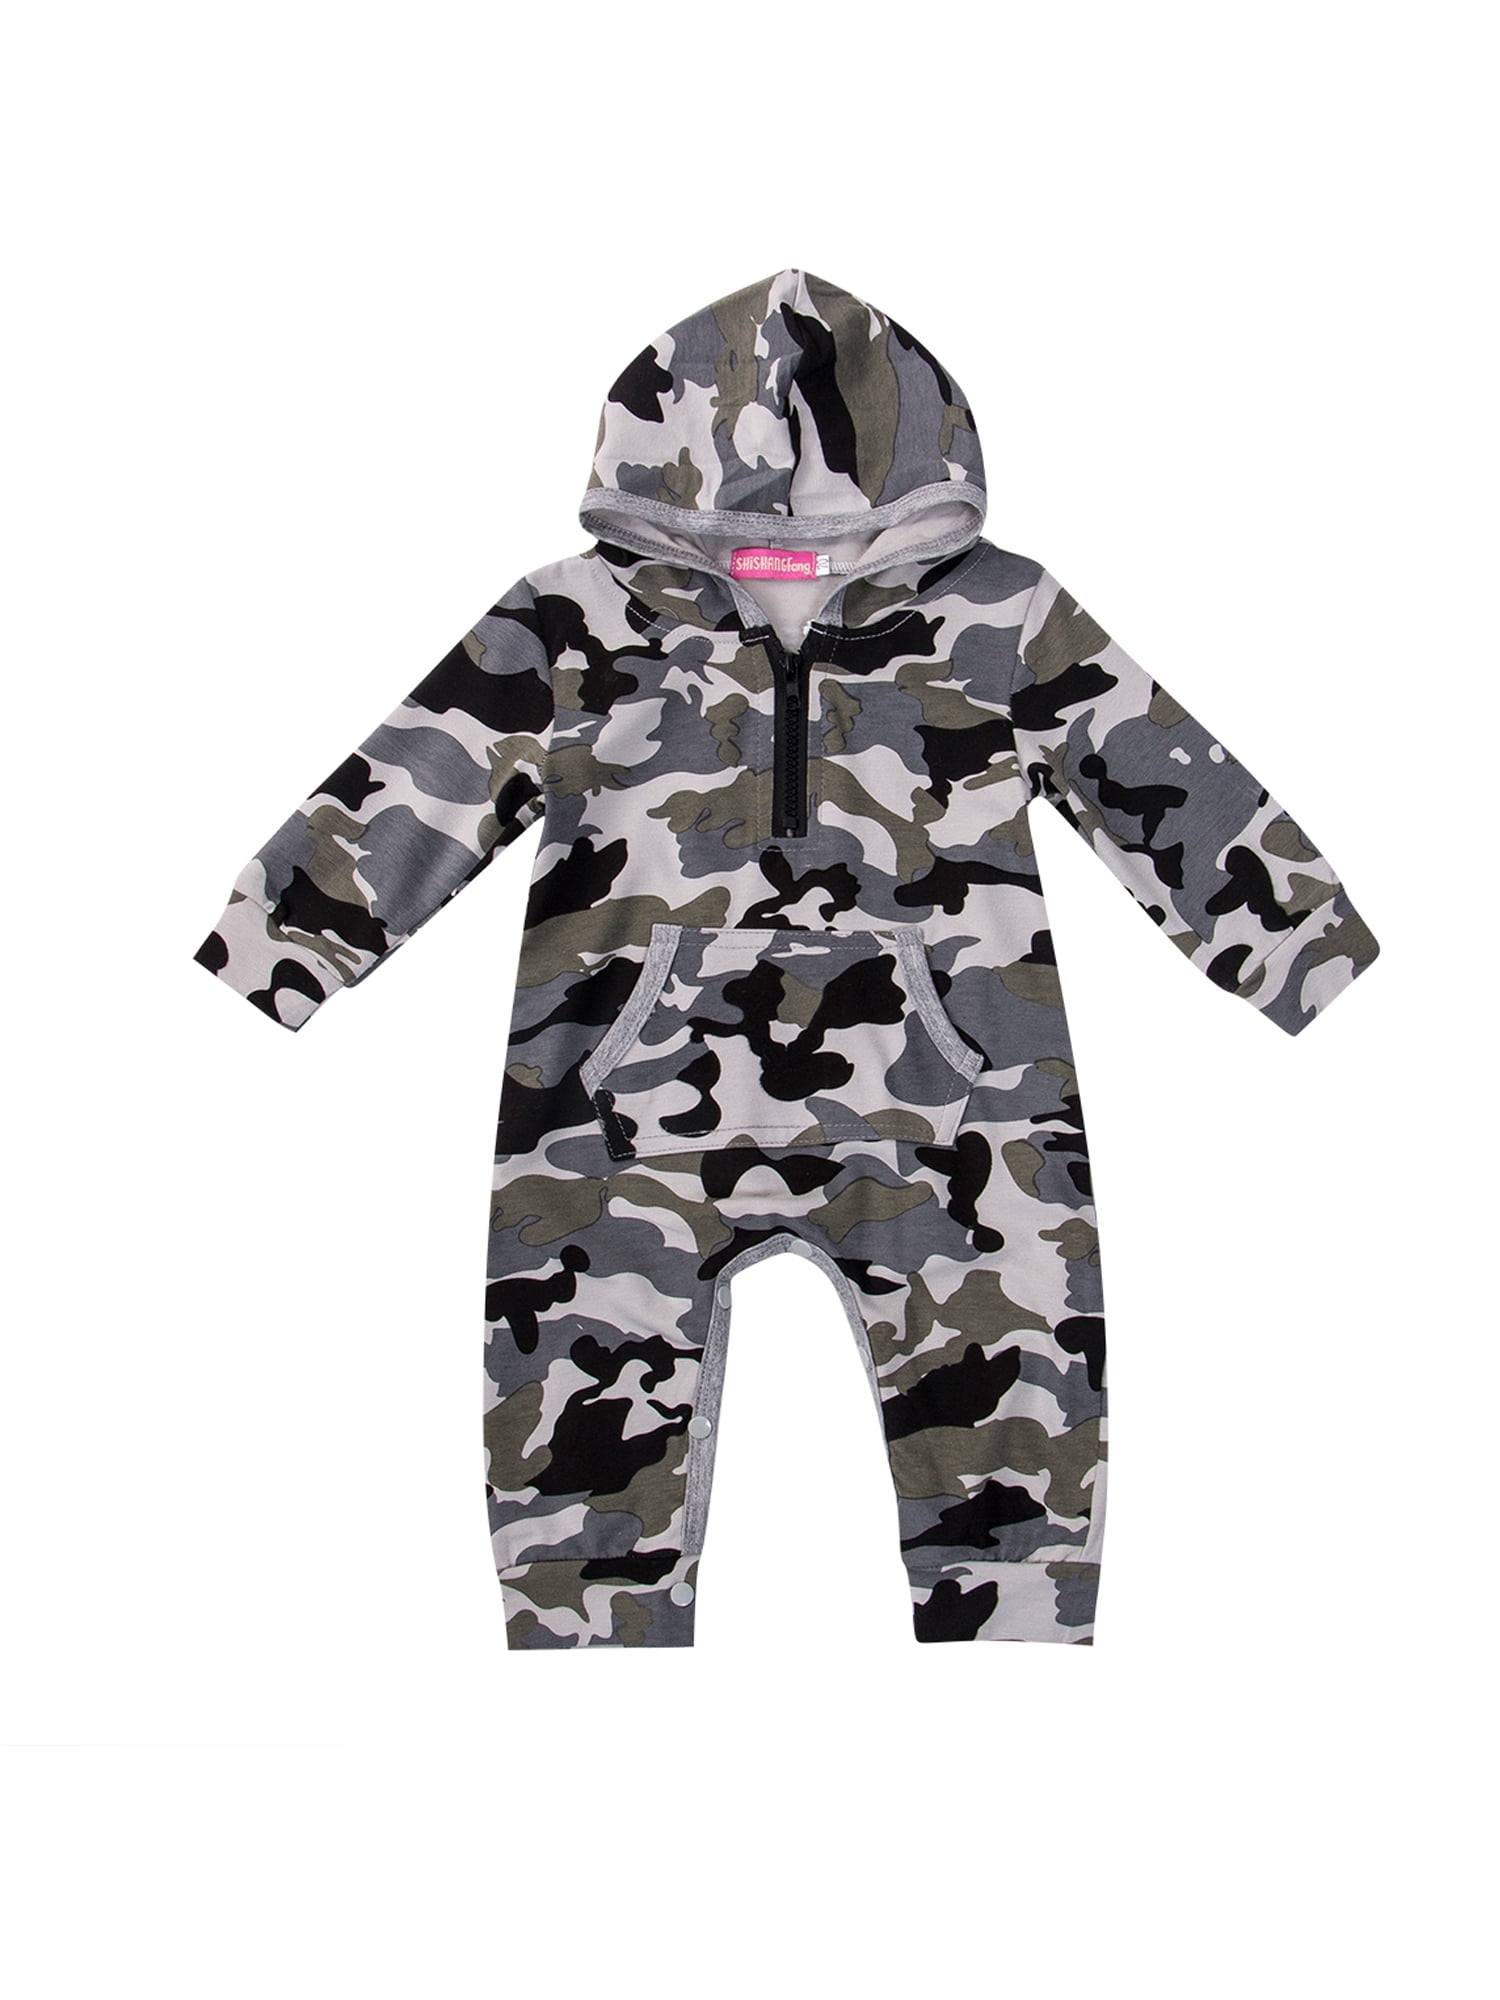 Tenworld Newborn Baby Boys Girls Summer Sleeveless Camouflage Harem Romper Jumpsuit